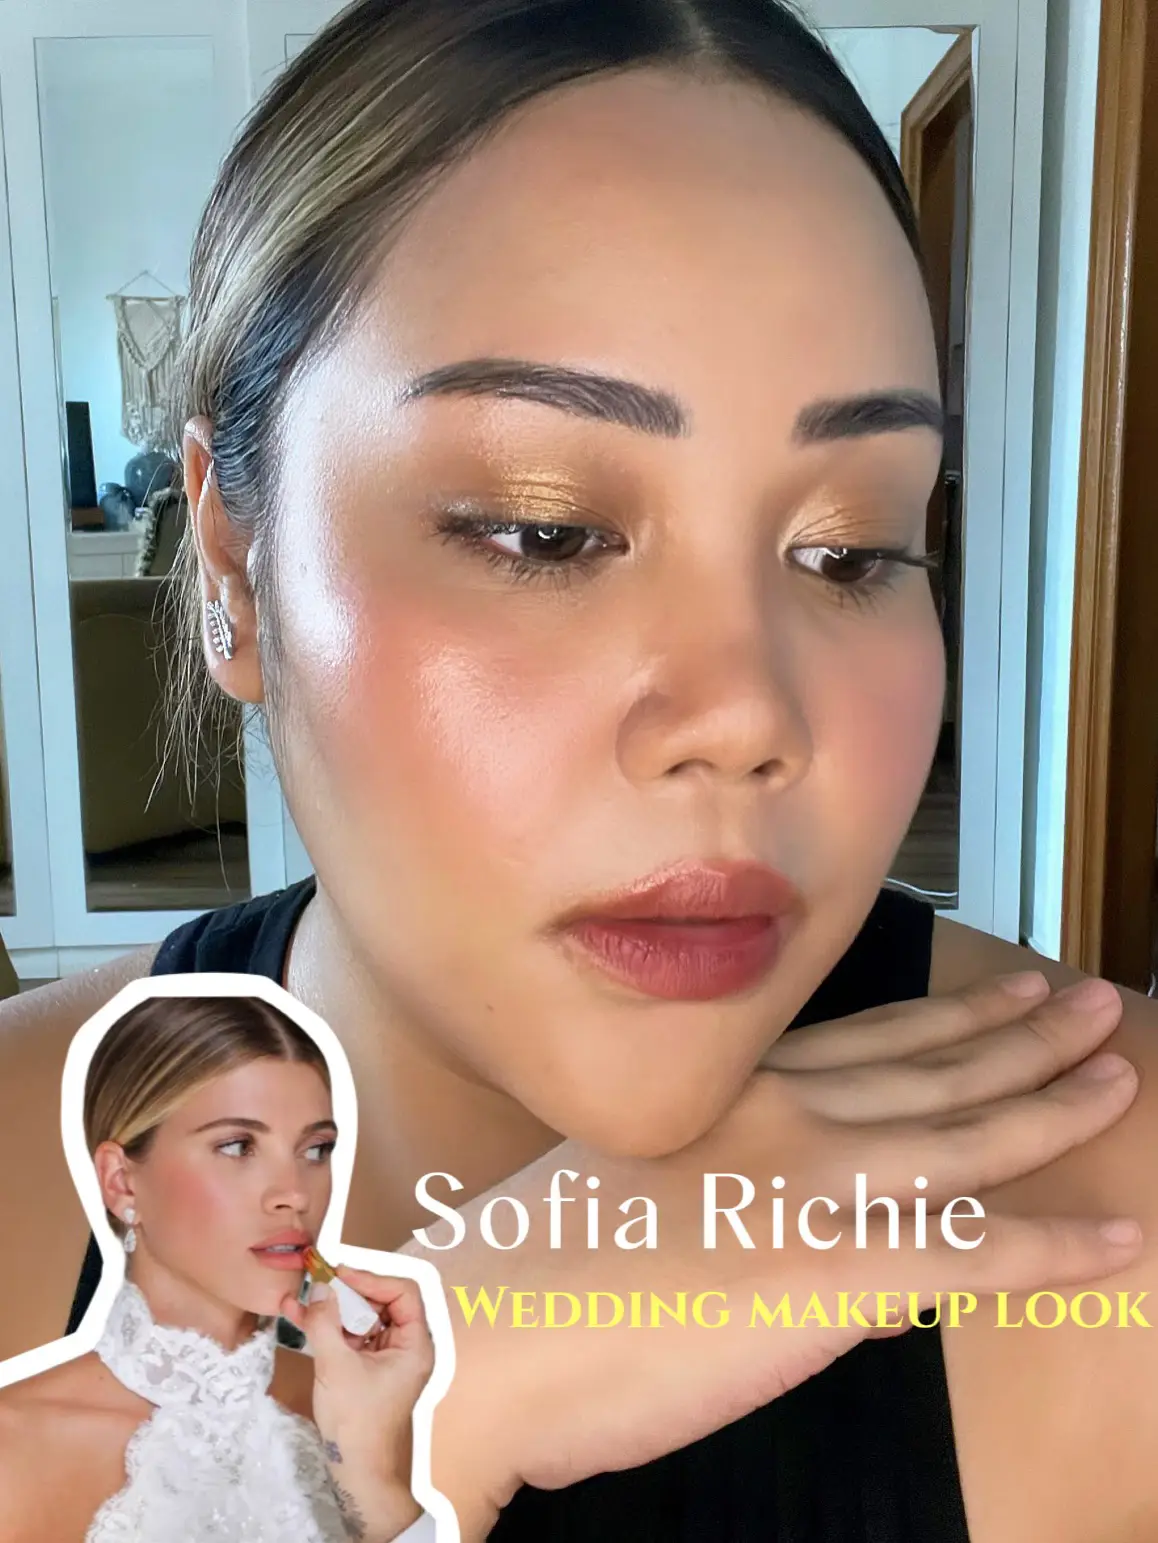 Sofia Richie Wedding Look, Video published by Samirara